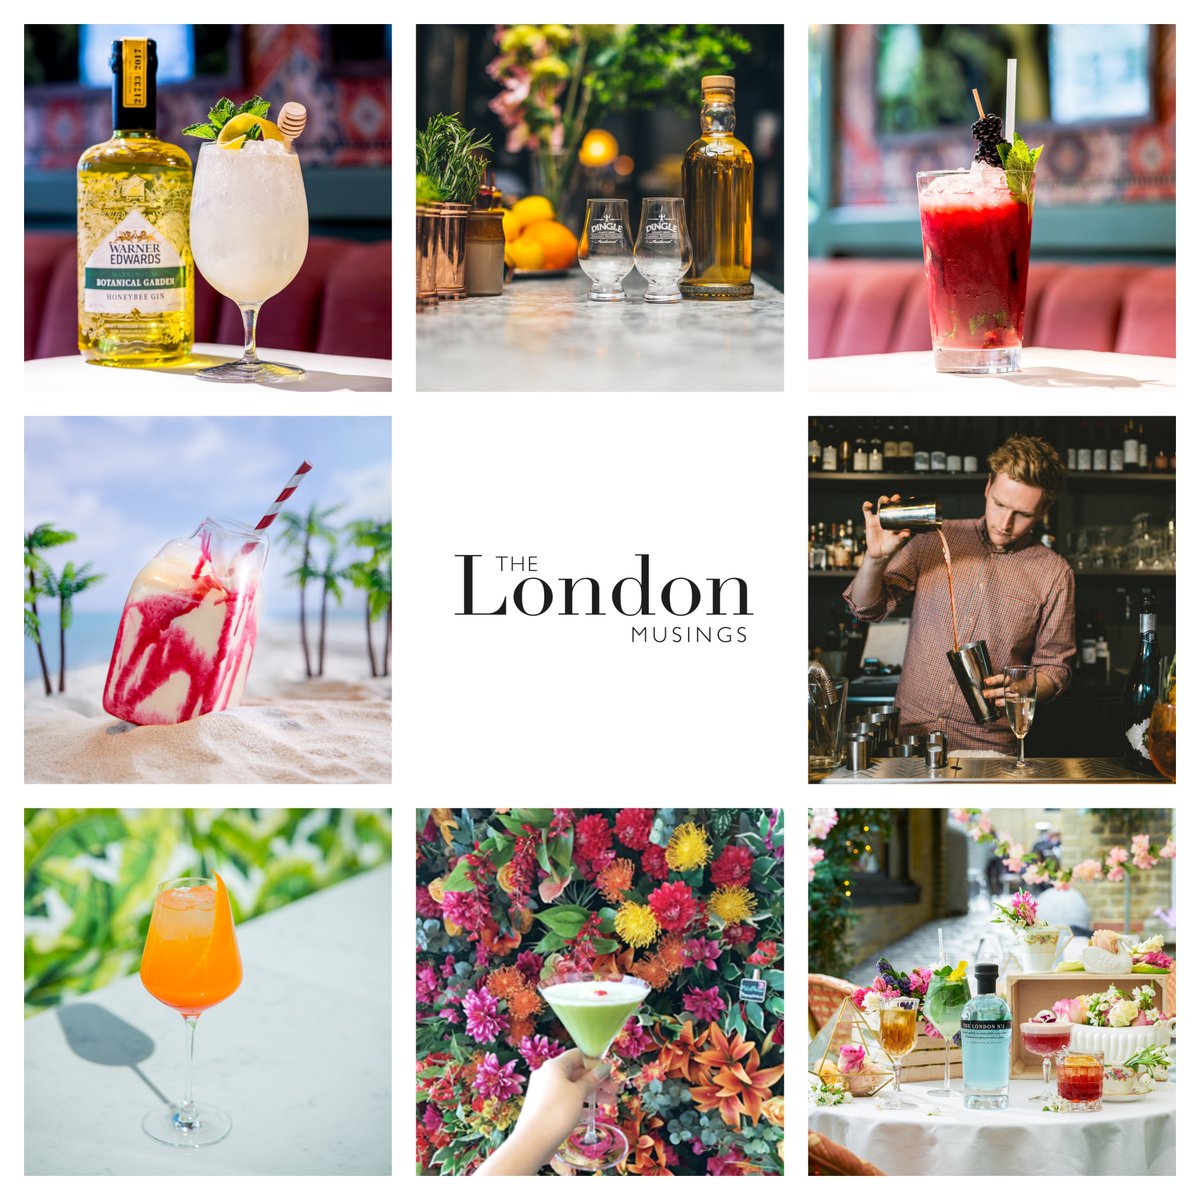 The Best Cocktail Bars in London 2018: The London Musings Edit is here! Featured: Southam Street, @JBruschetta, @WLondonHotel @IvyChelsGarden, @HushMayfair, @MerchantHouse_F, @CaravanResto 🍸🌴🍋 goo.gl/PoVtyq